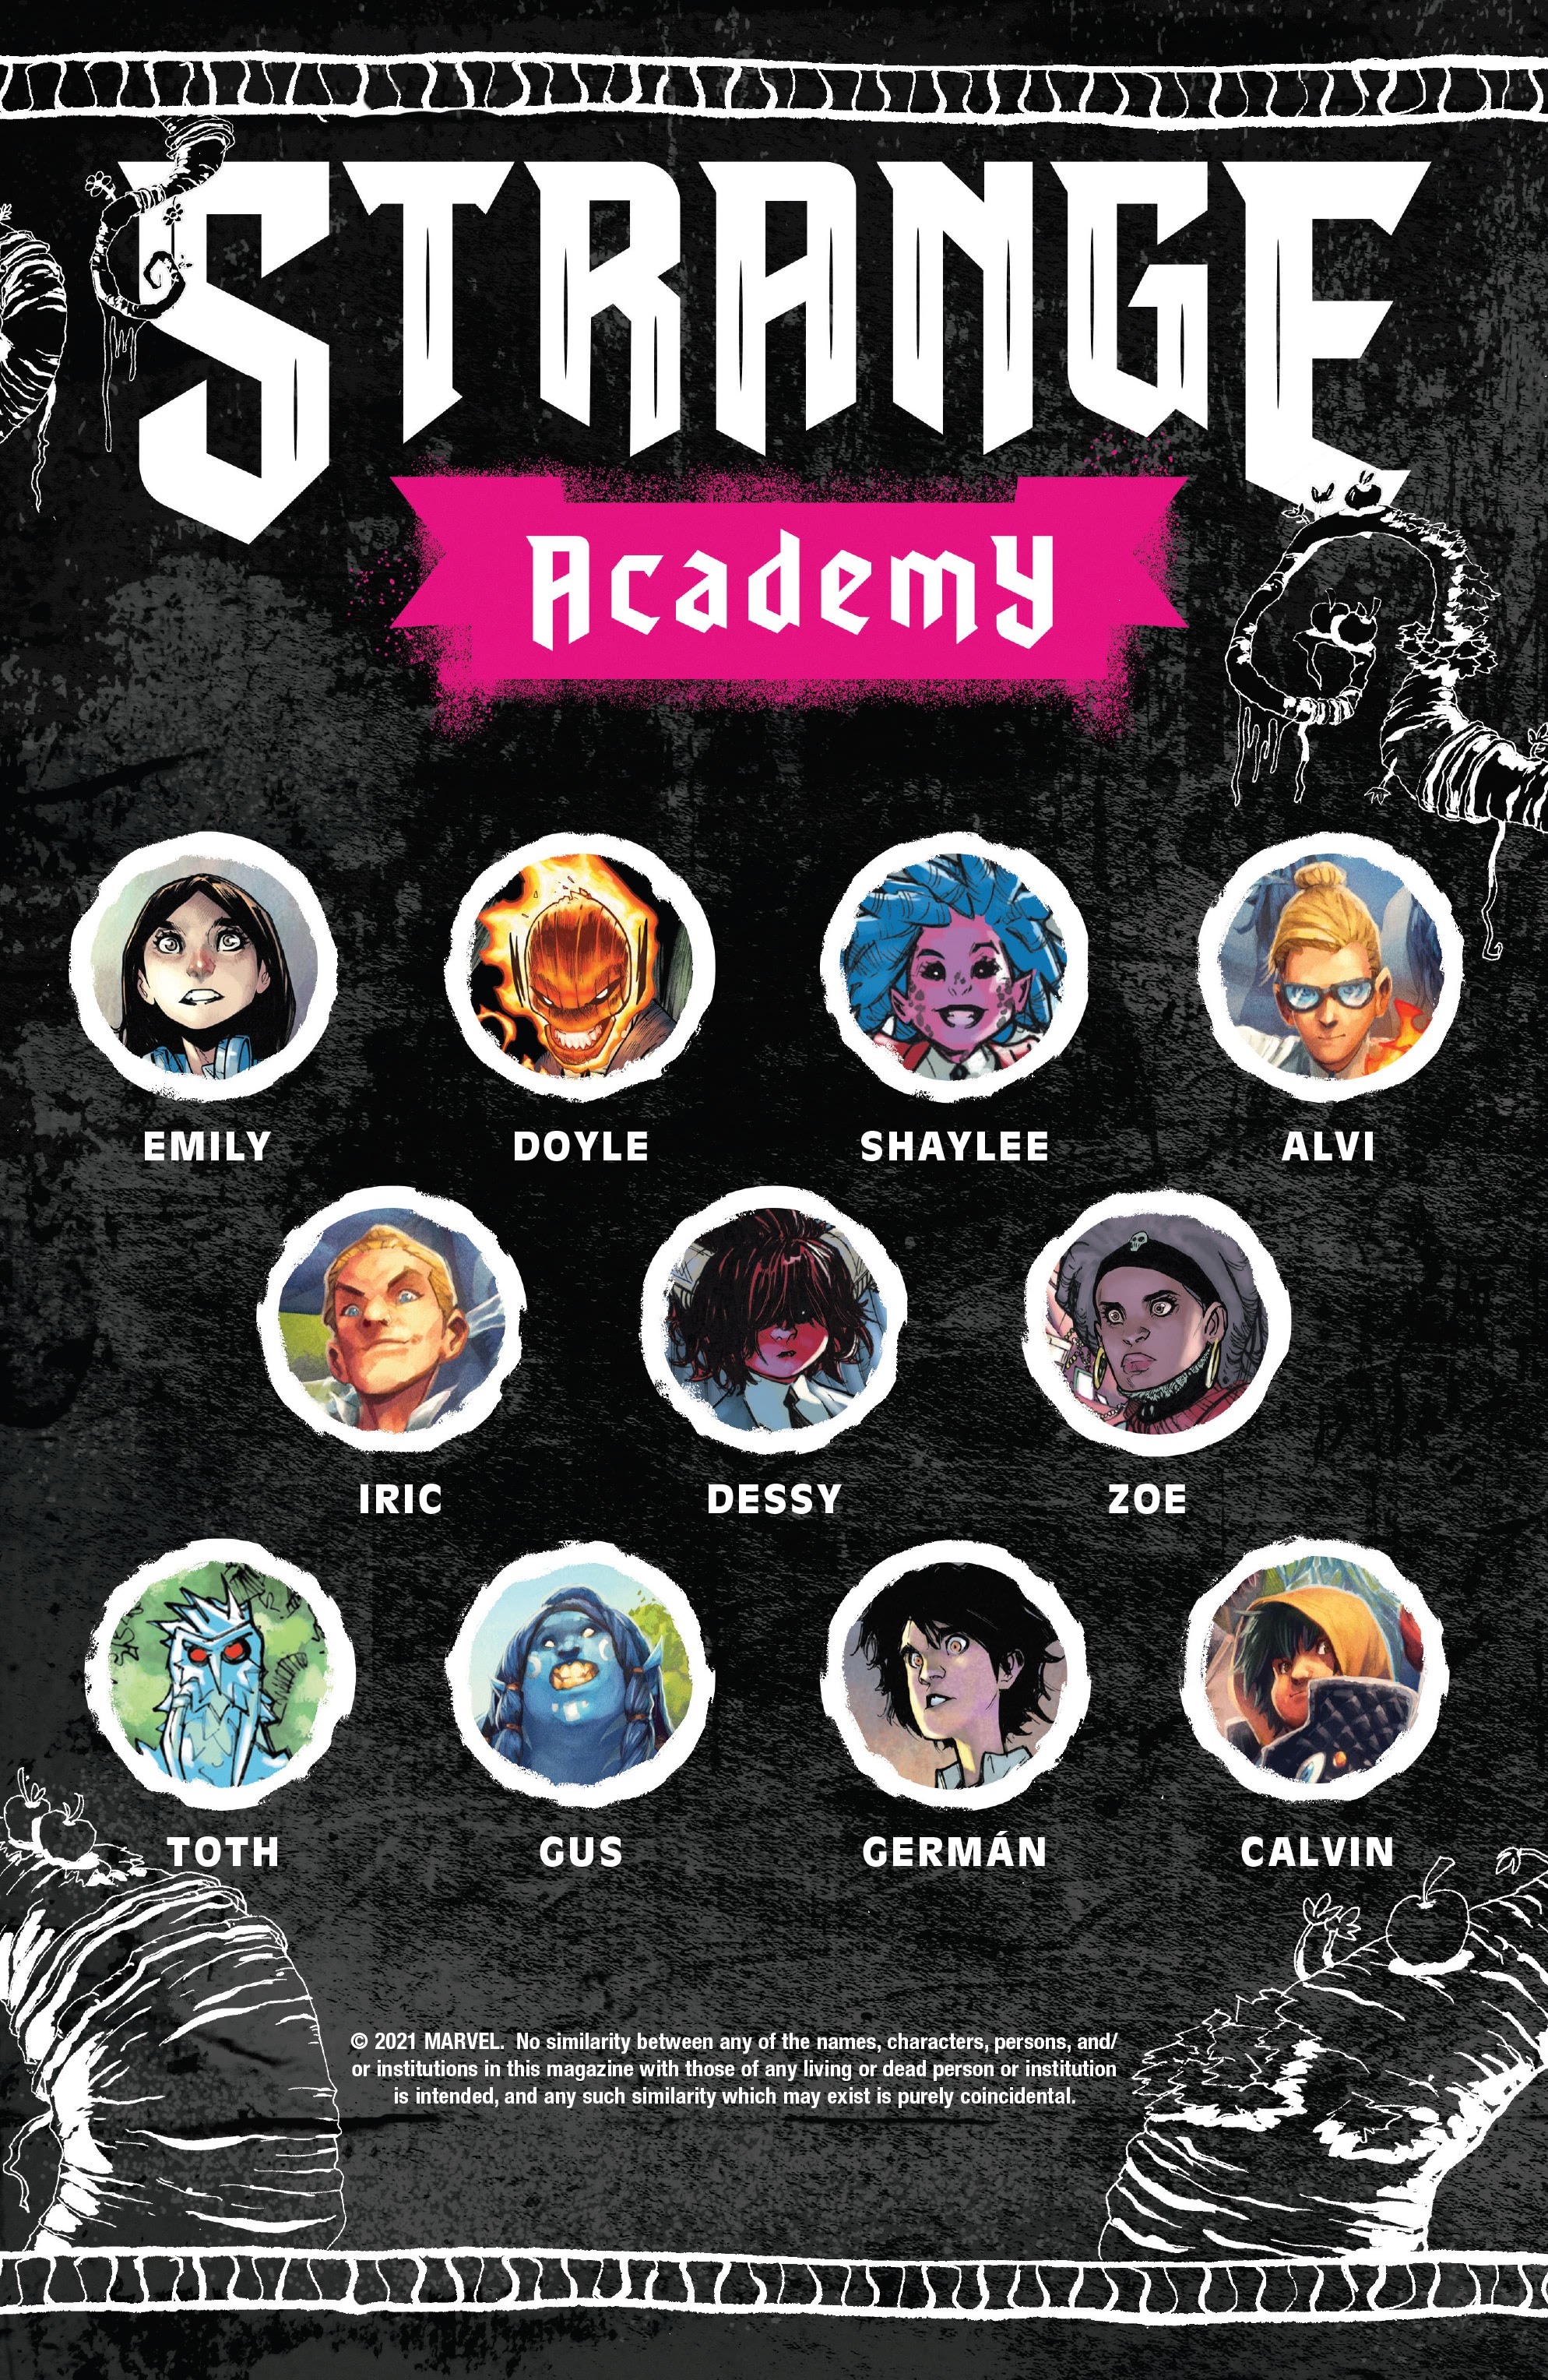 Read online Strange Academy comic -  Issue #13 - 3